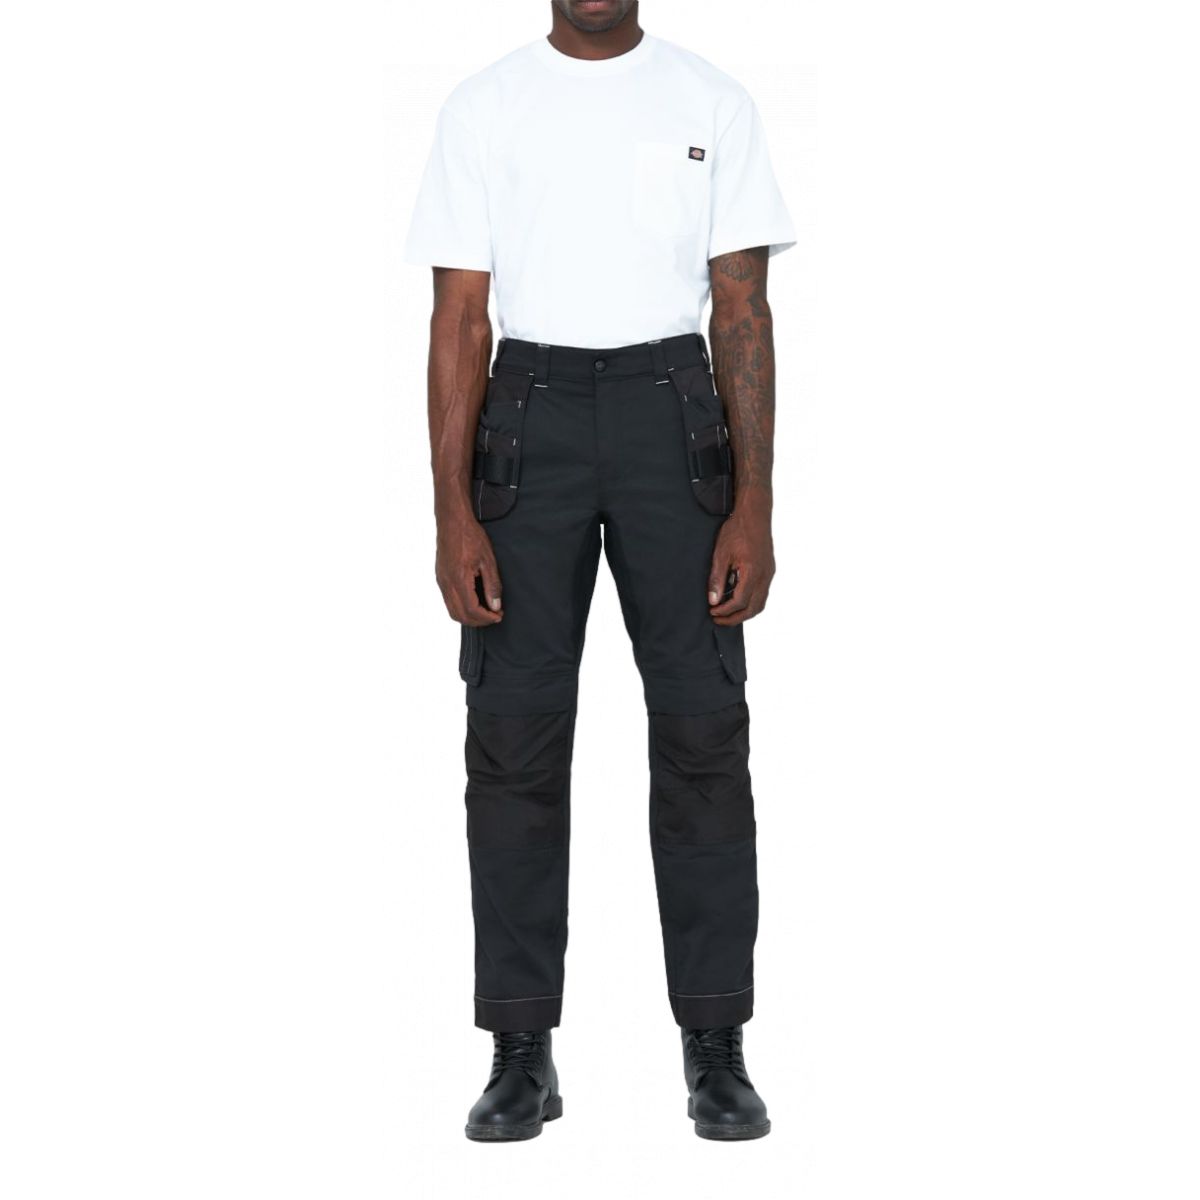 Pantalon Universal Flex Noir - Dickies - Taille 48 0